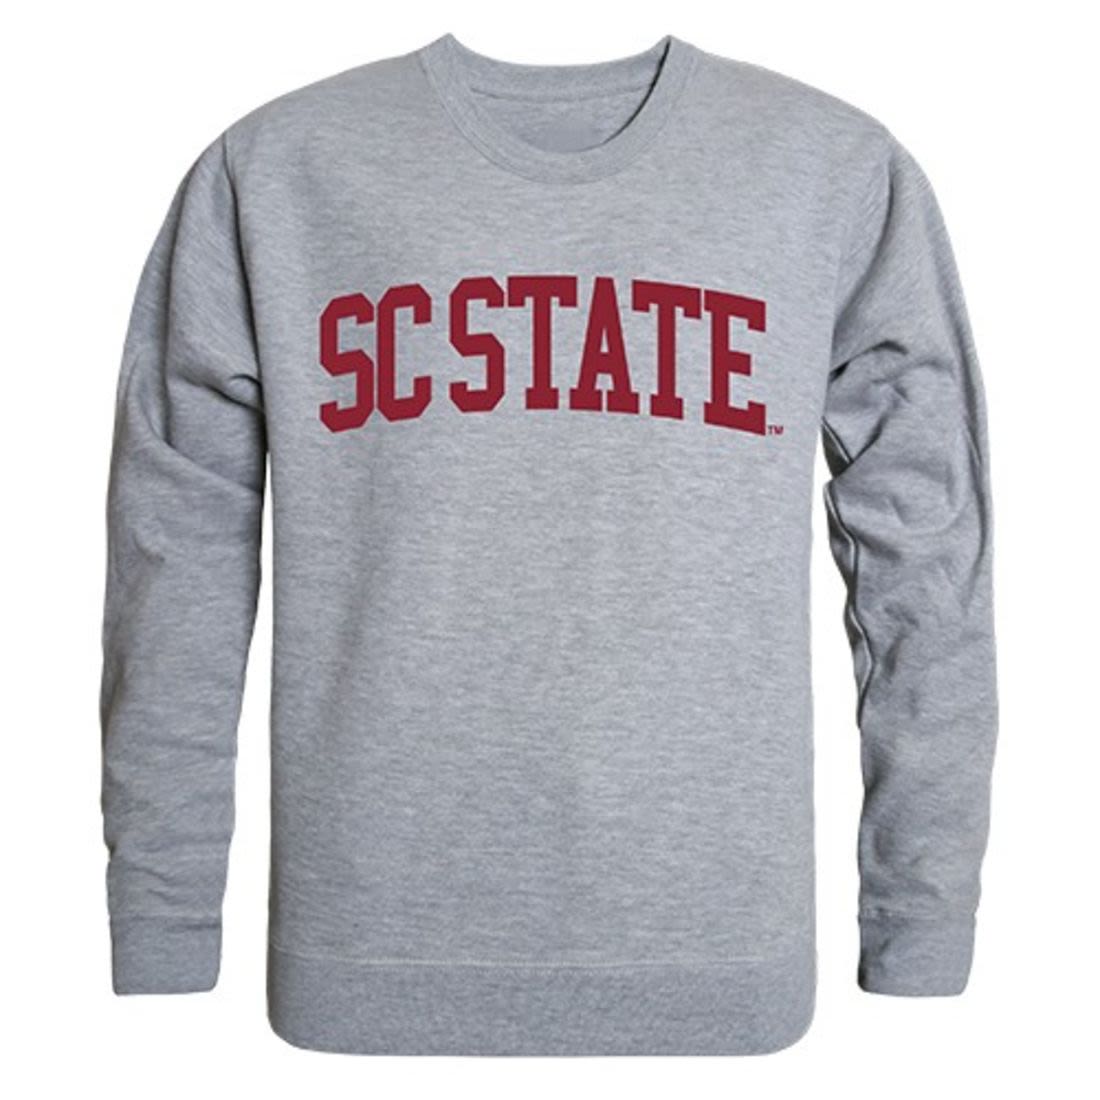 South Carolina State University Game Day Crewneck Pullover Sweatshirt Sweater Heather Grey-Campus-Wardrobe